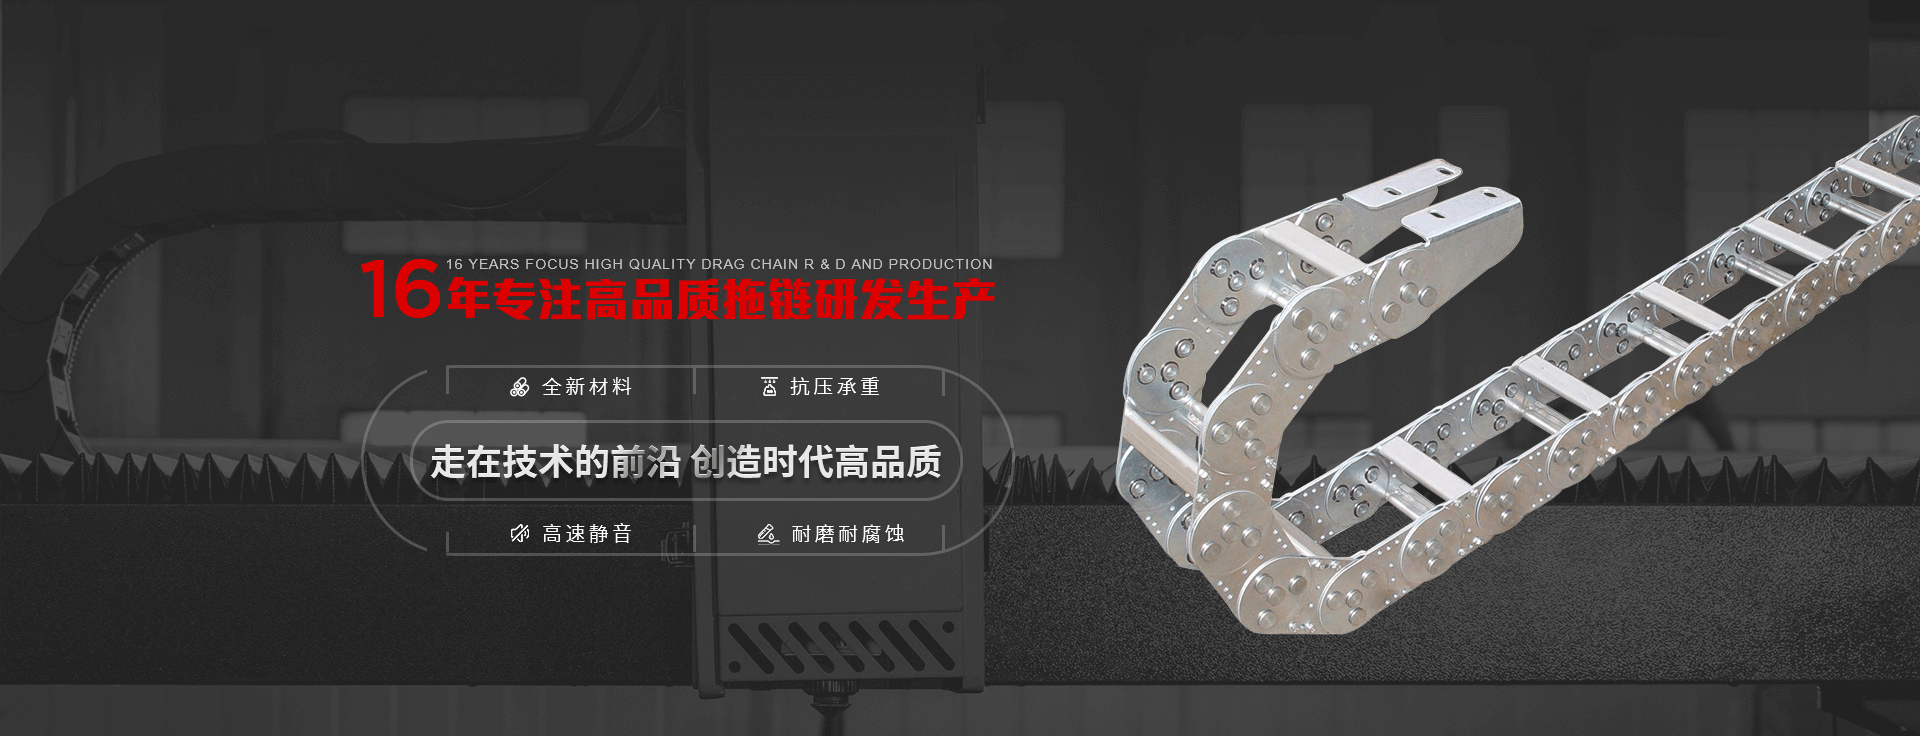 NBA下注官网 - nba中国官方网站机械banner